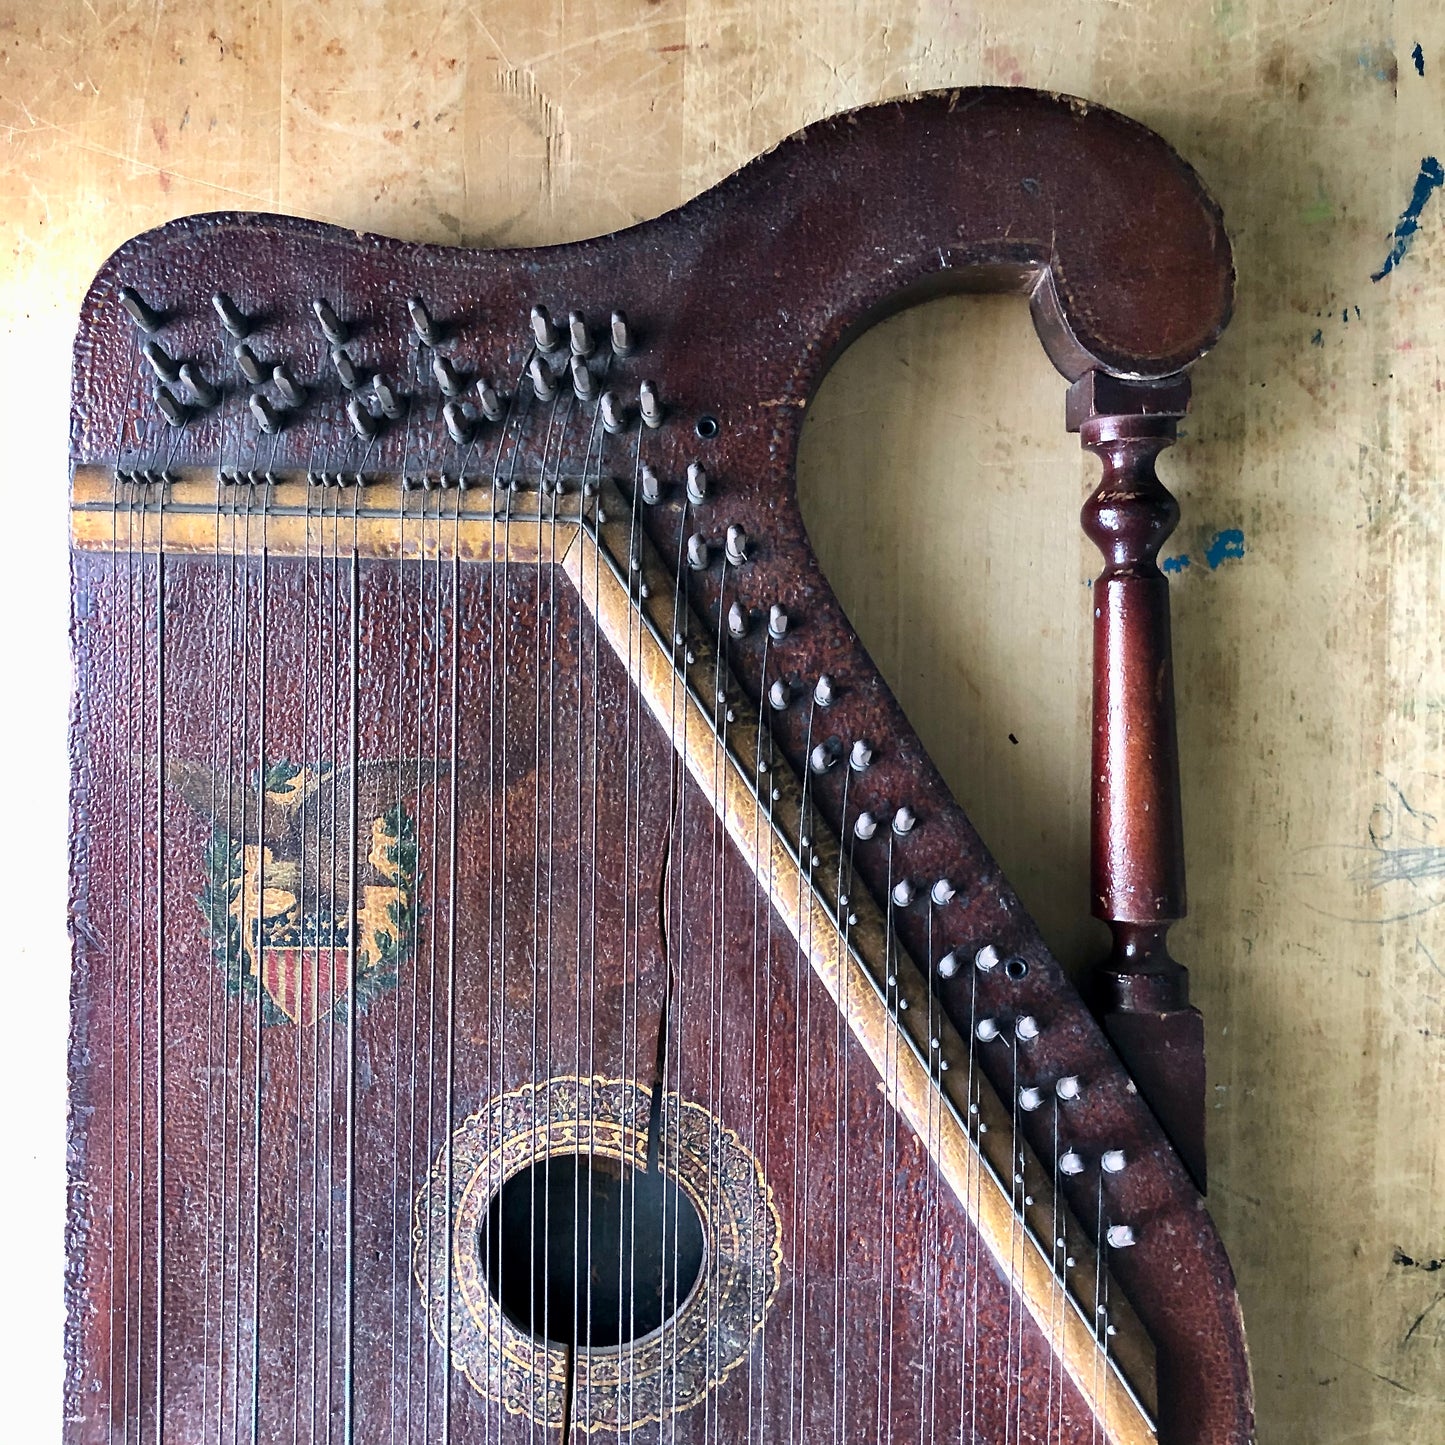 Antique Zither Instrument with Eagle Emblem (c.1920s)